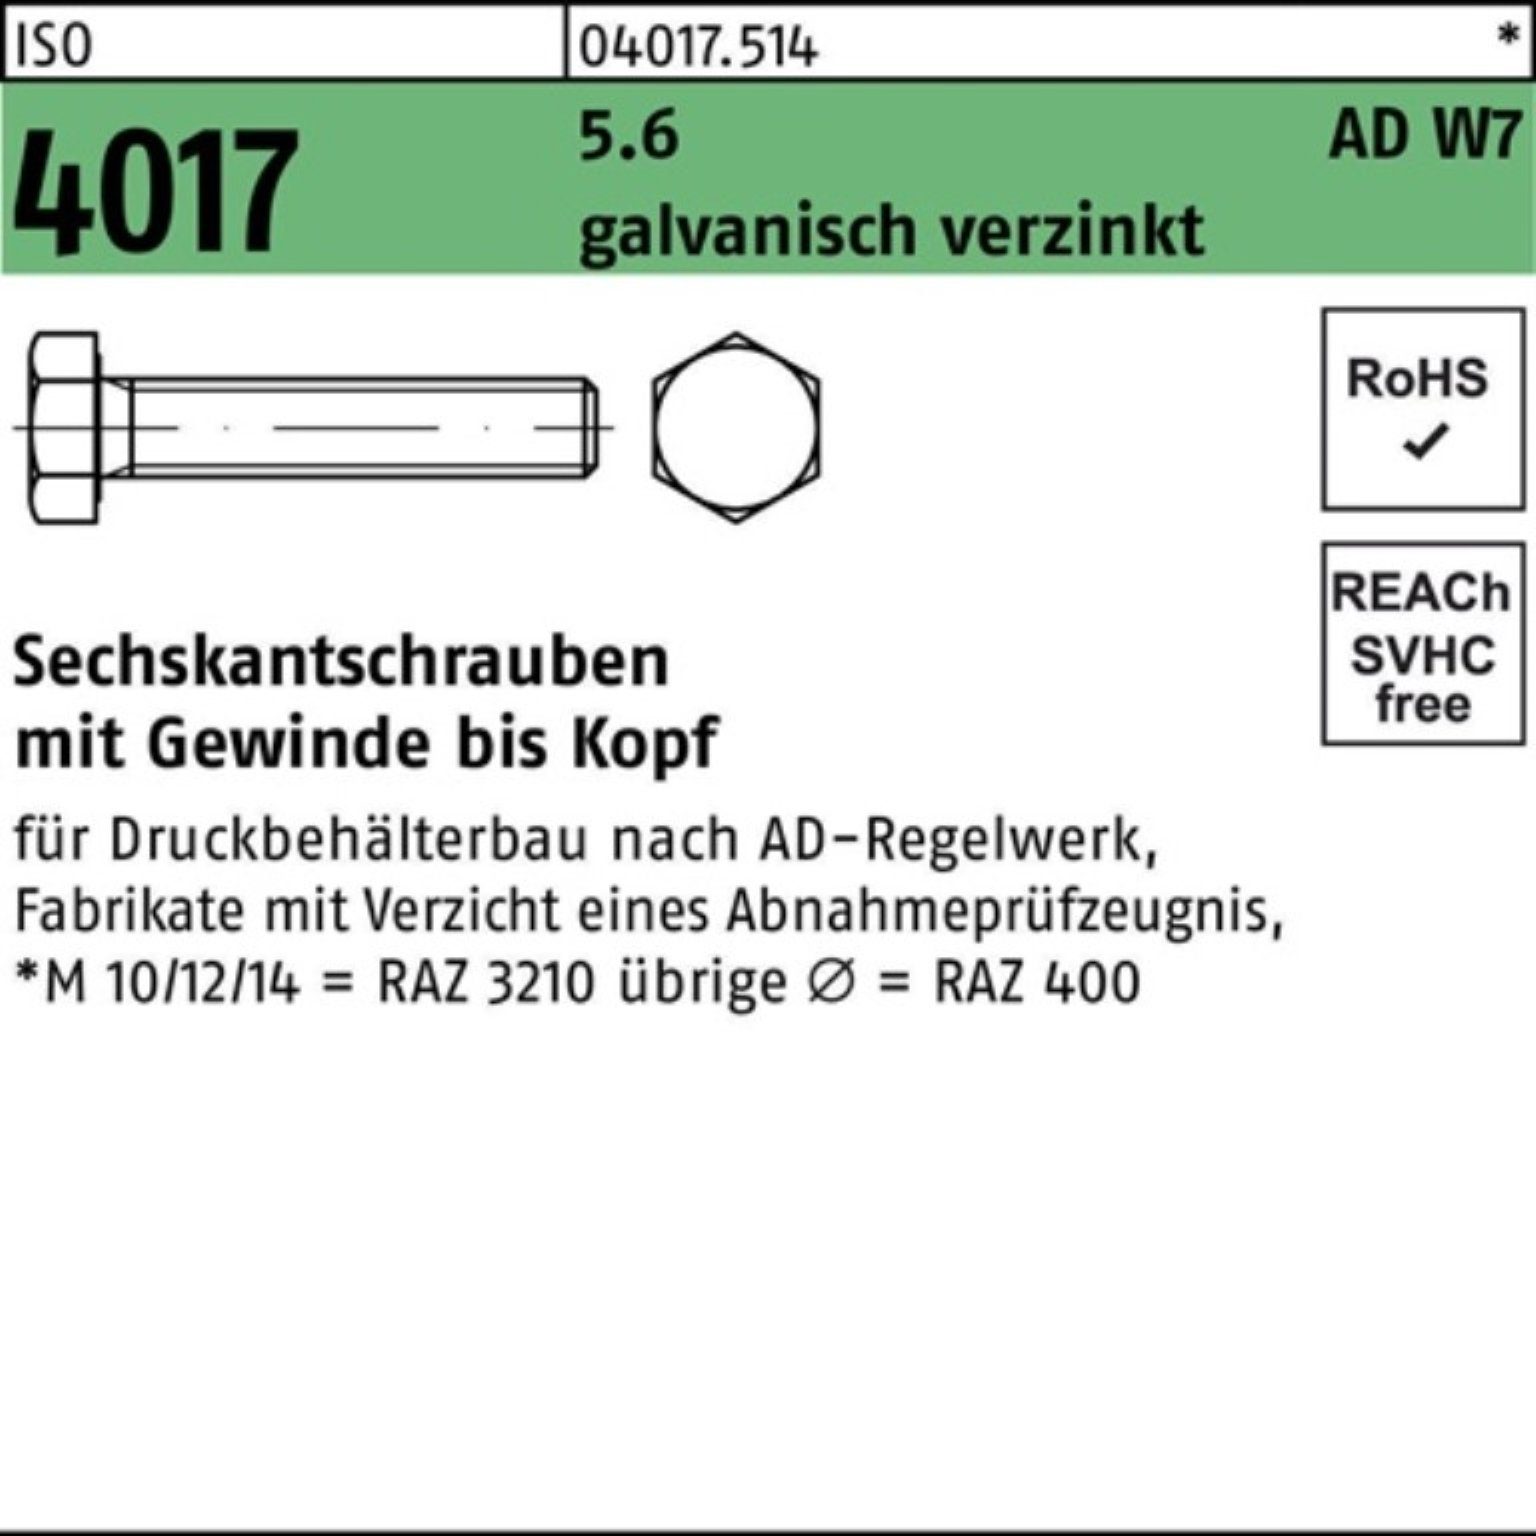 VG Bufab Pack Sechskantschraube 70 W7 AD Sechskantschraube 4017 5.6 M10x galv.verz. 100er ISO